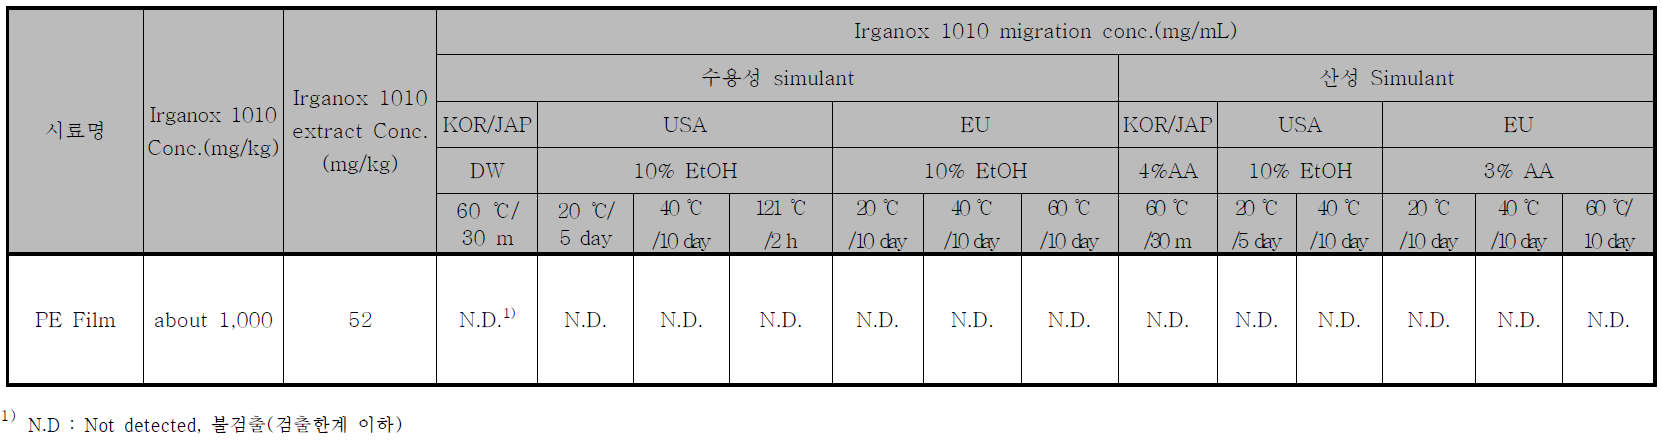 PE Film 중 Irganox 1010의 수용성 및 산성 simulant 이행량 분석결과